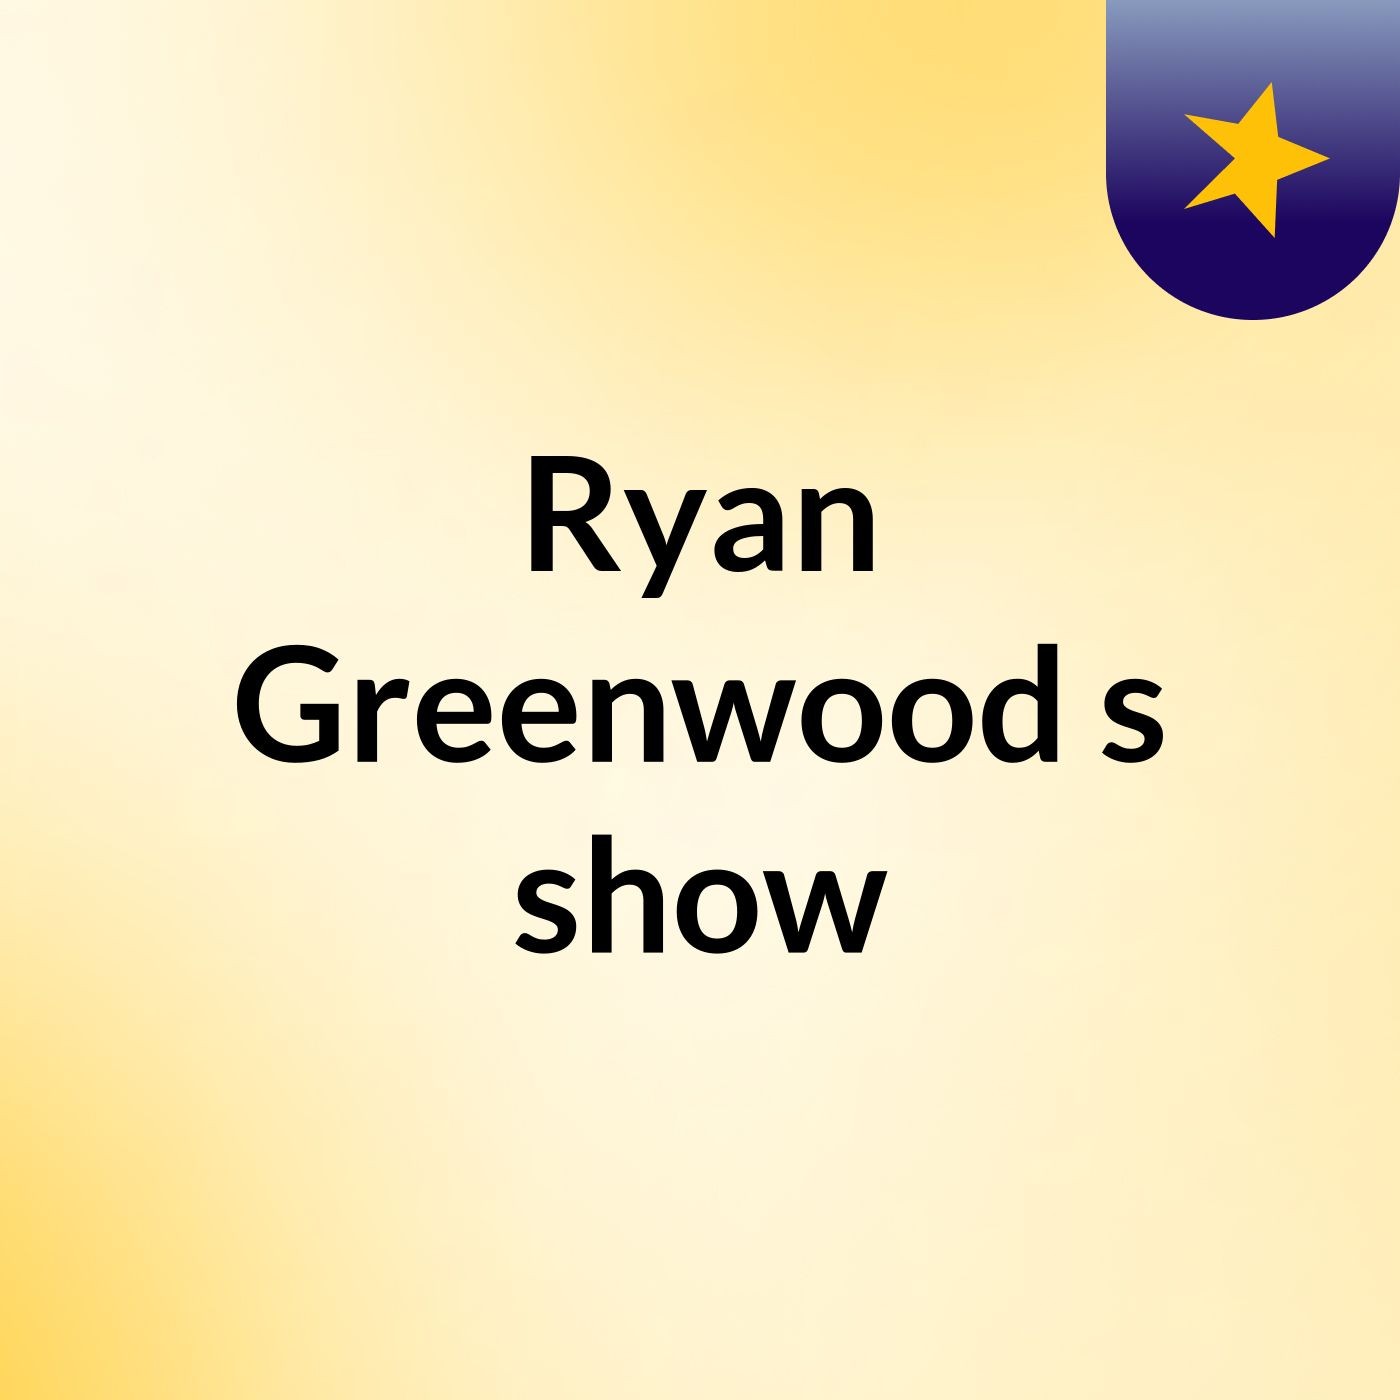 Ryan Greenwood's show